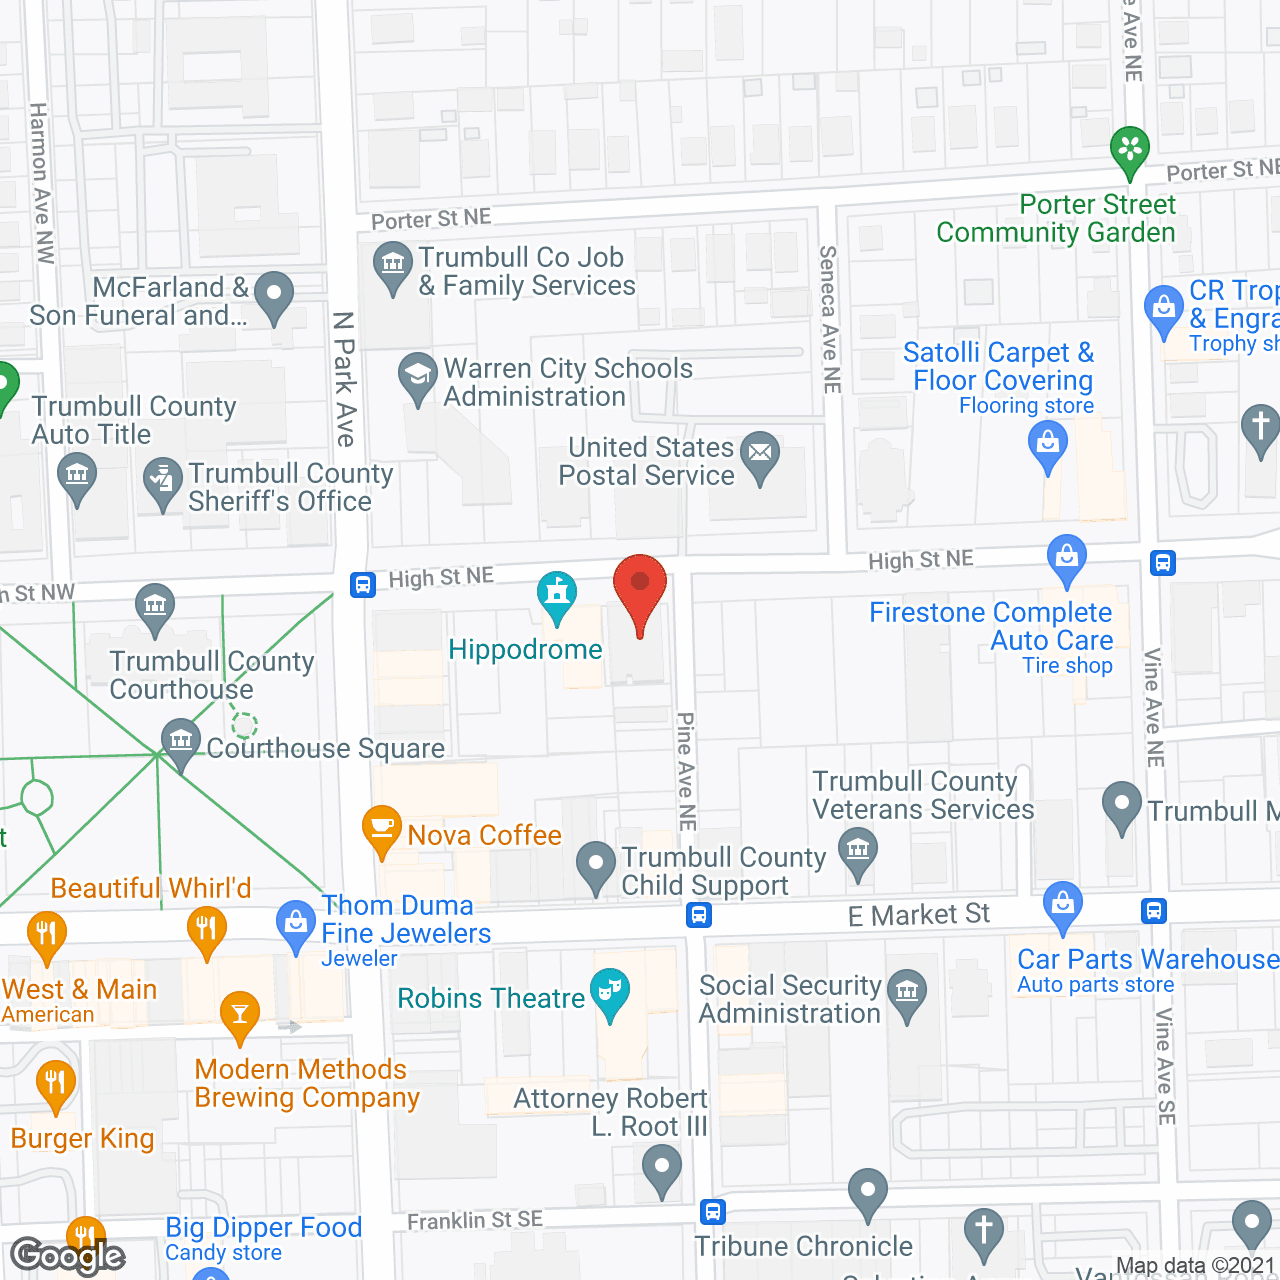 Warner House in google map